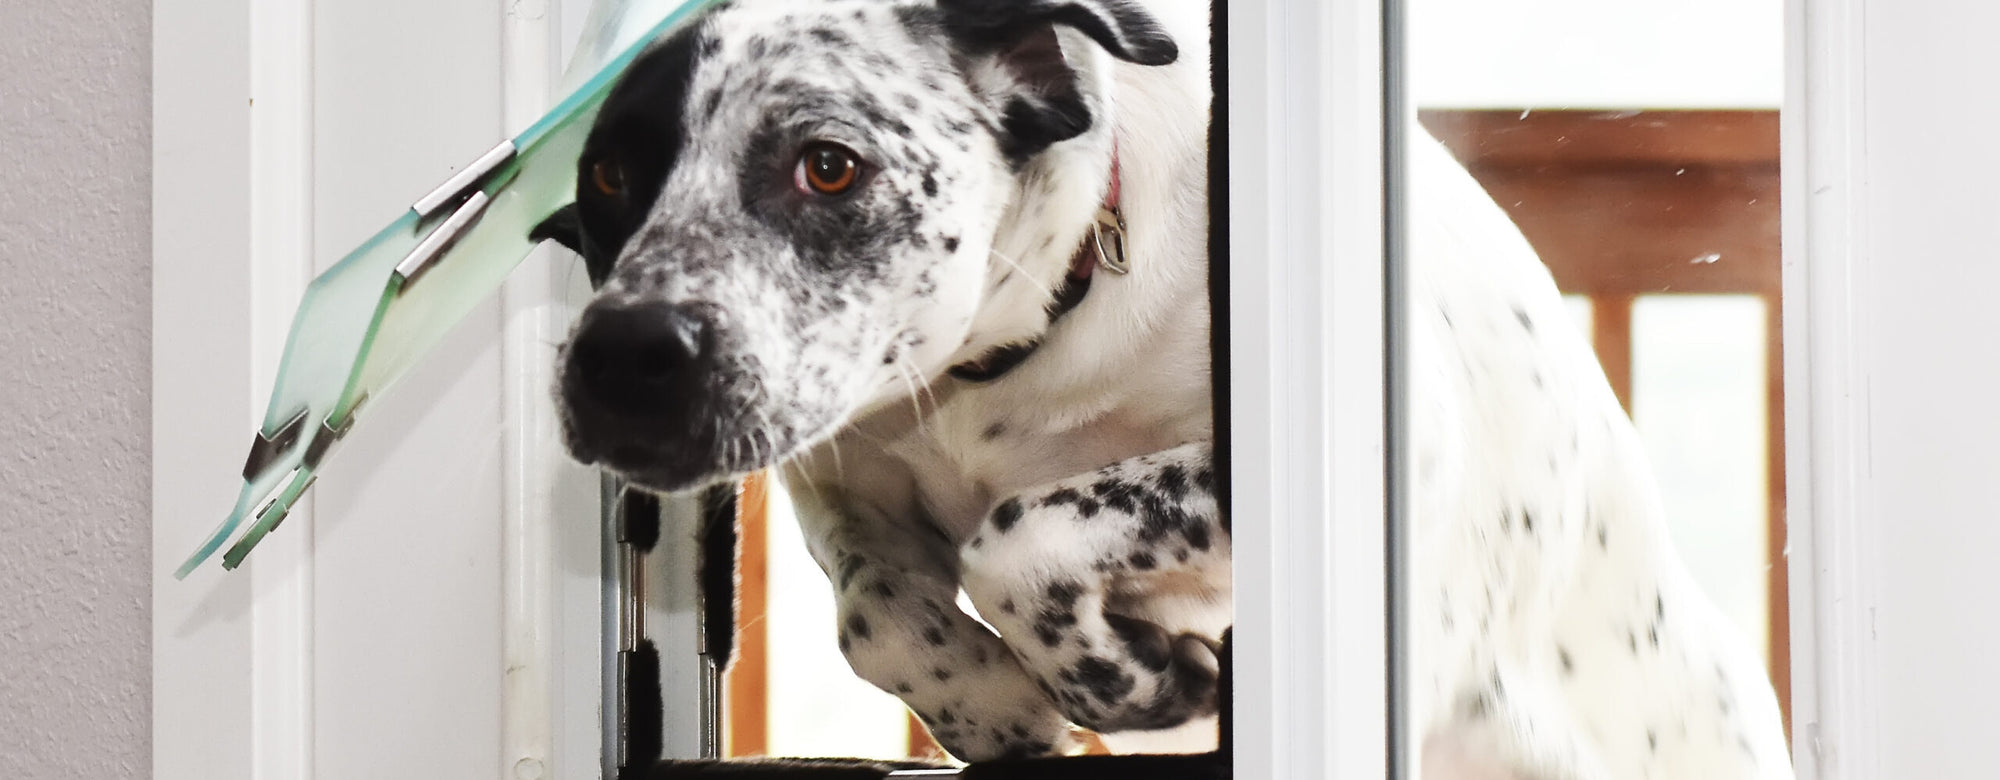 two corgi dogs sitting inside an exterior door with dog proofer hale pet door installed